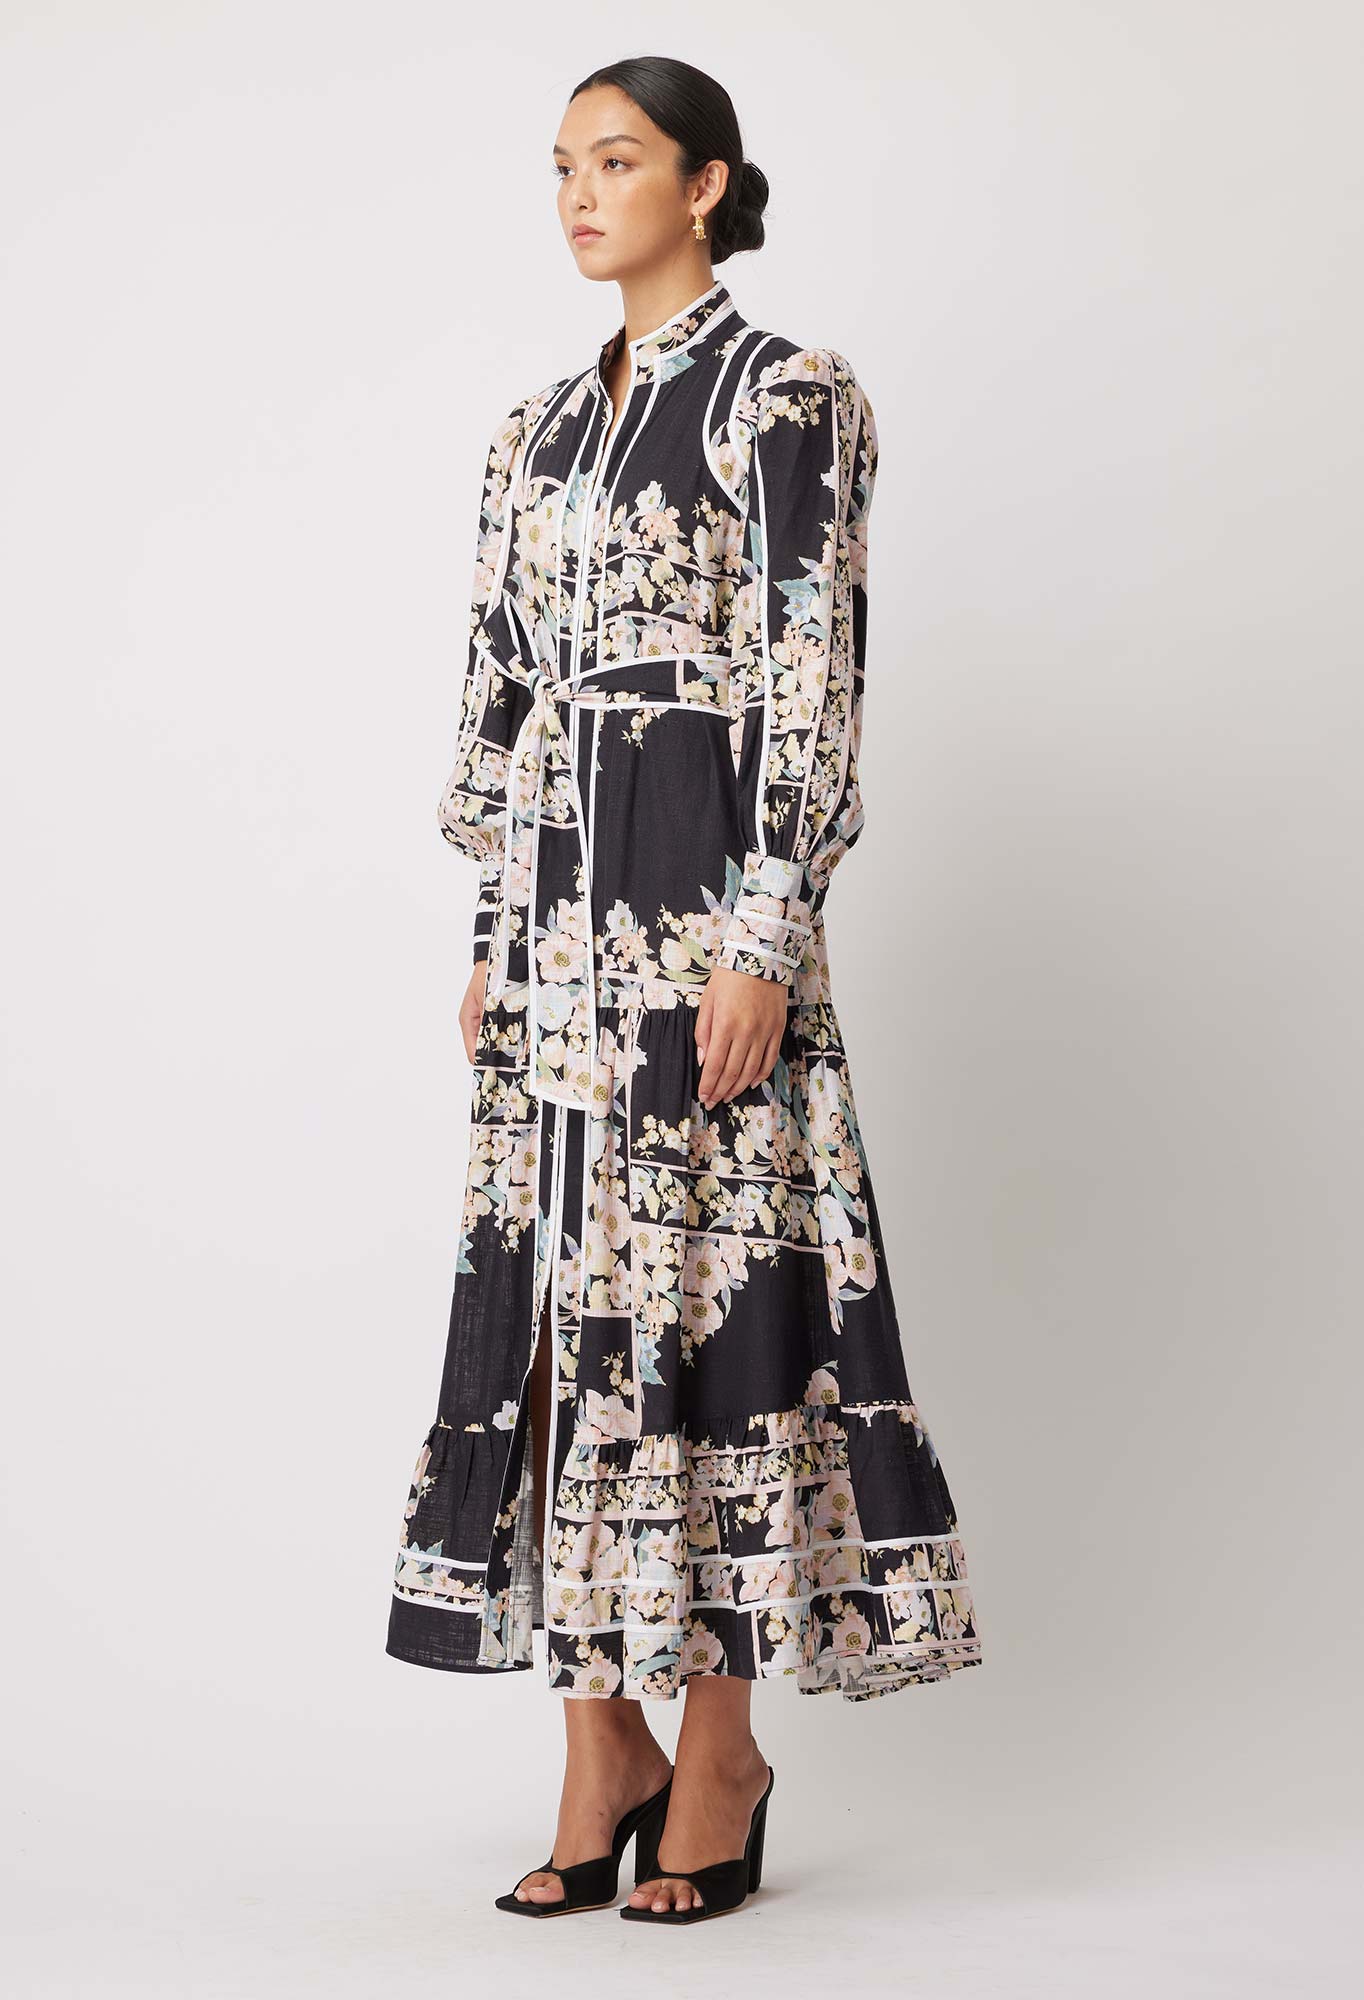 Pantea Viscose/Linen Dress in Rosewater Border Print